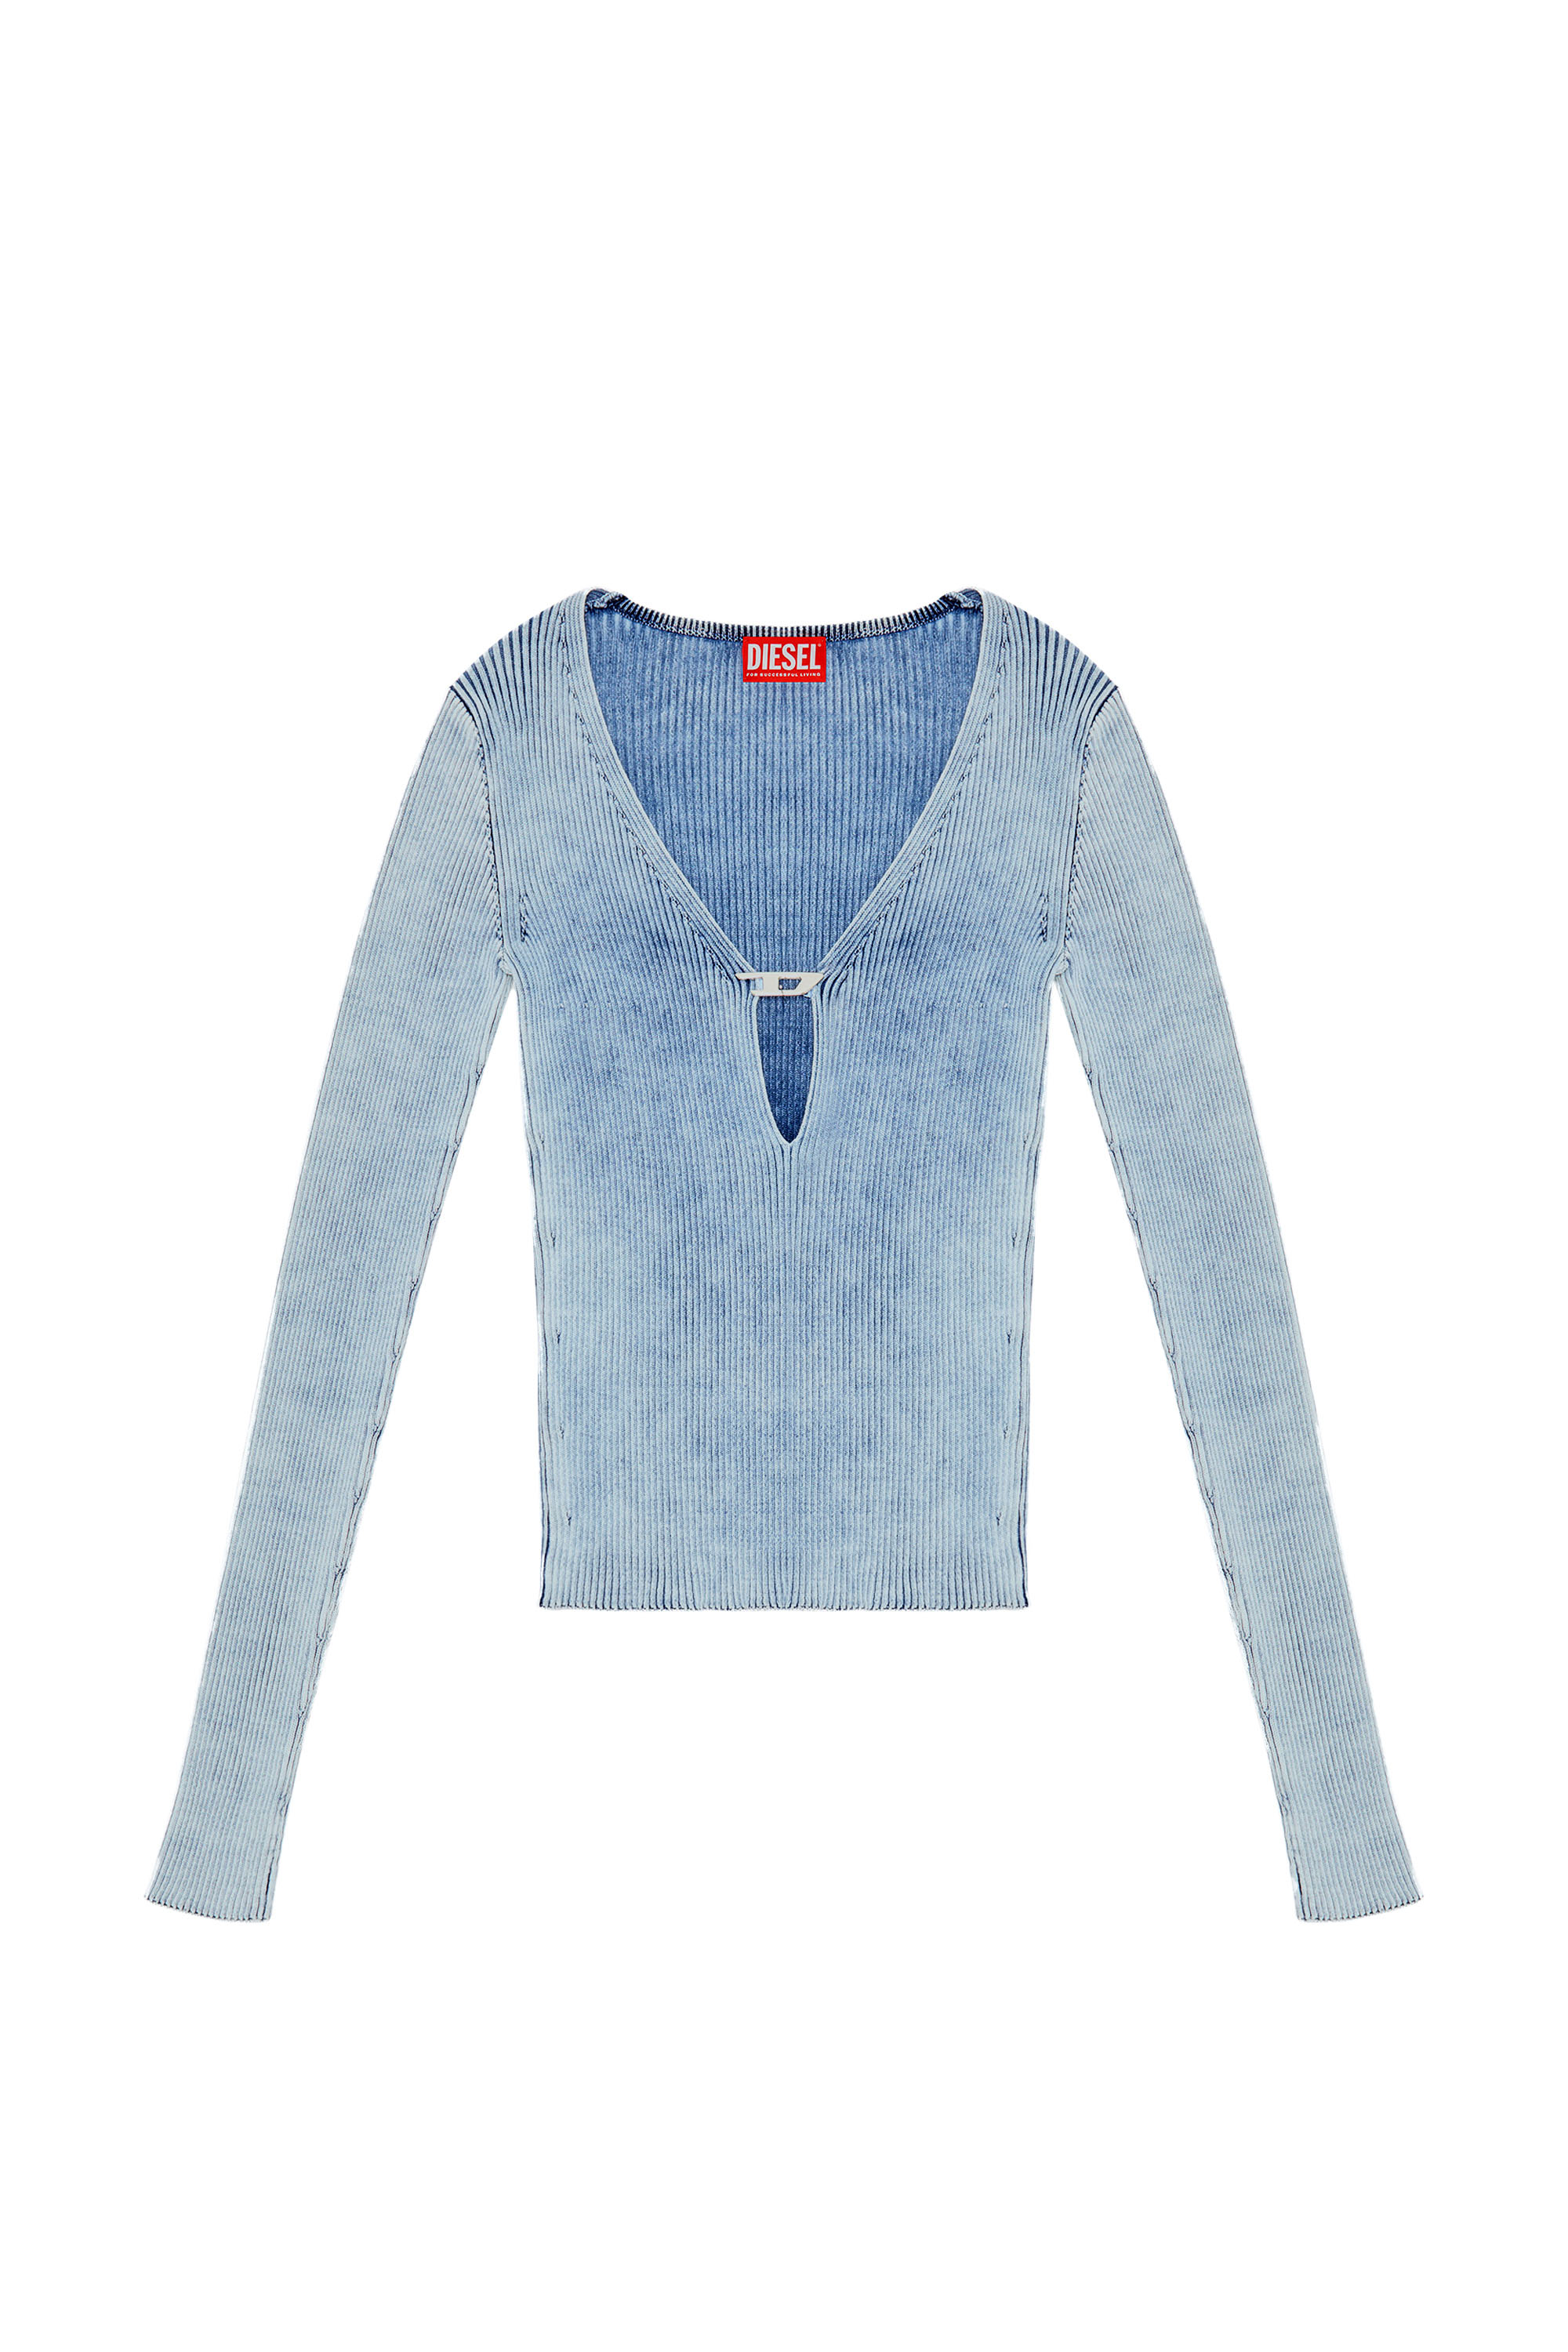 Diesel - M-TERI, Damen Cutout-Top aus Indigo-Baumwollstrick in Blau - Image 3